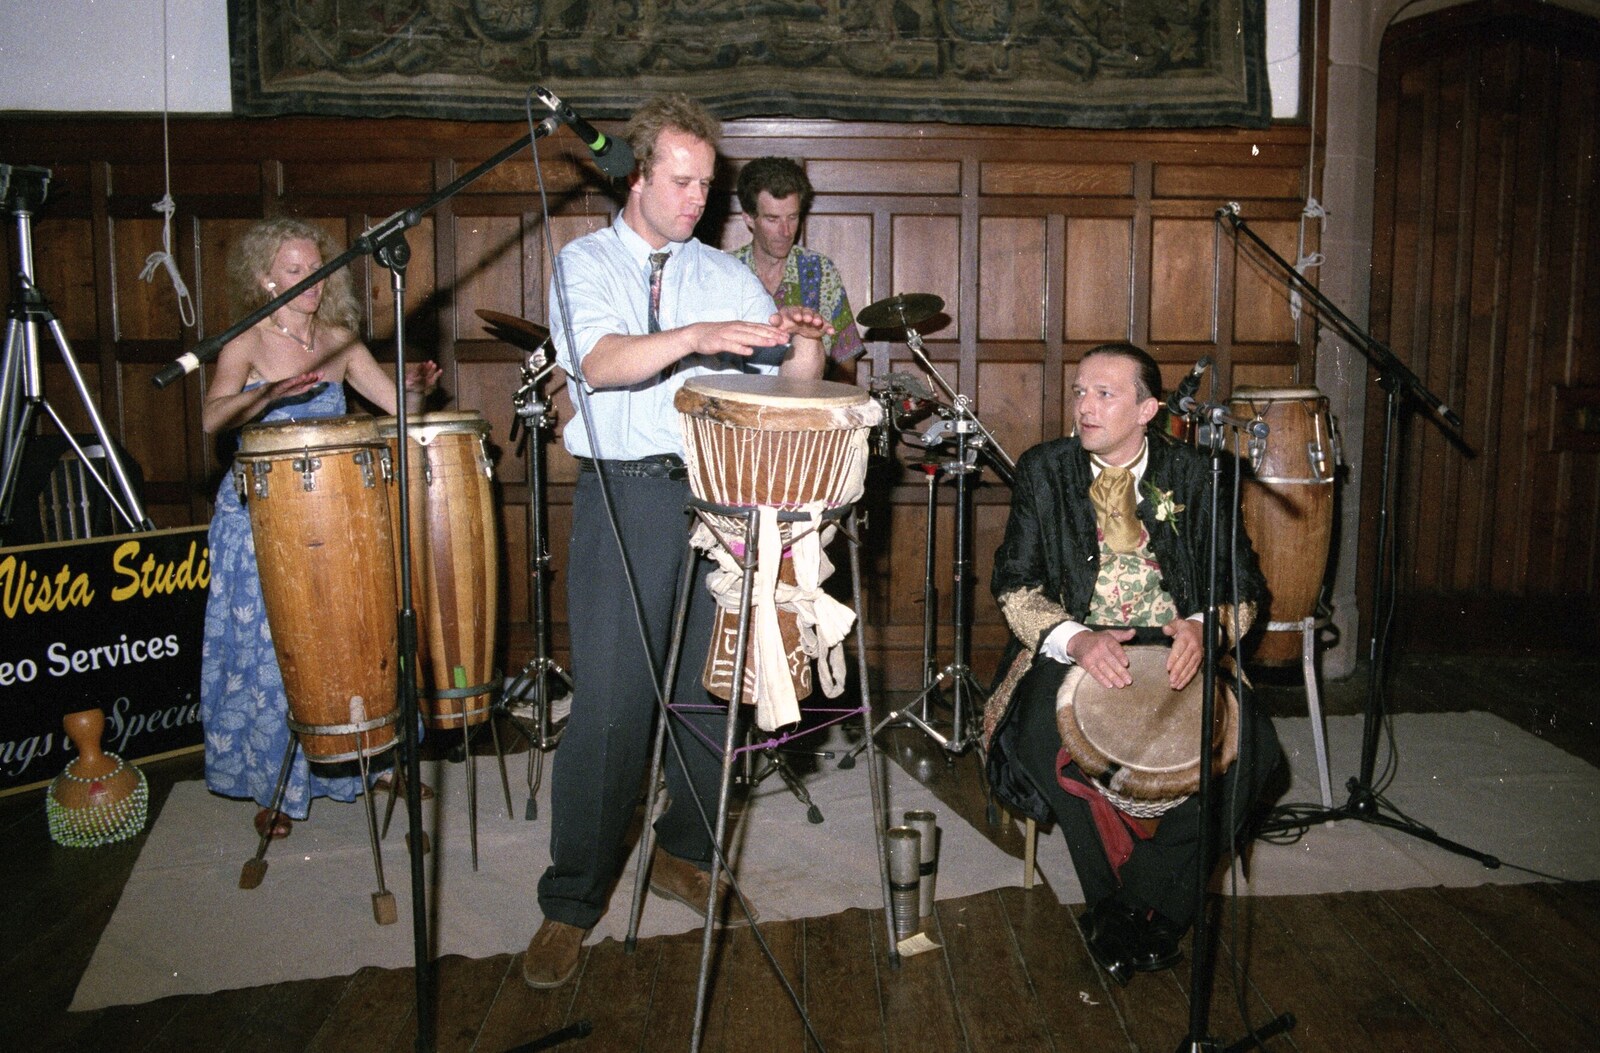 Stuart and Sarah's CISU Wedding, Naworth Castle, Brampton, Cumbria - 21st September 1996: Stuart helps out with drums